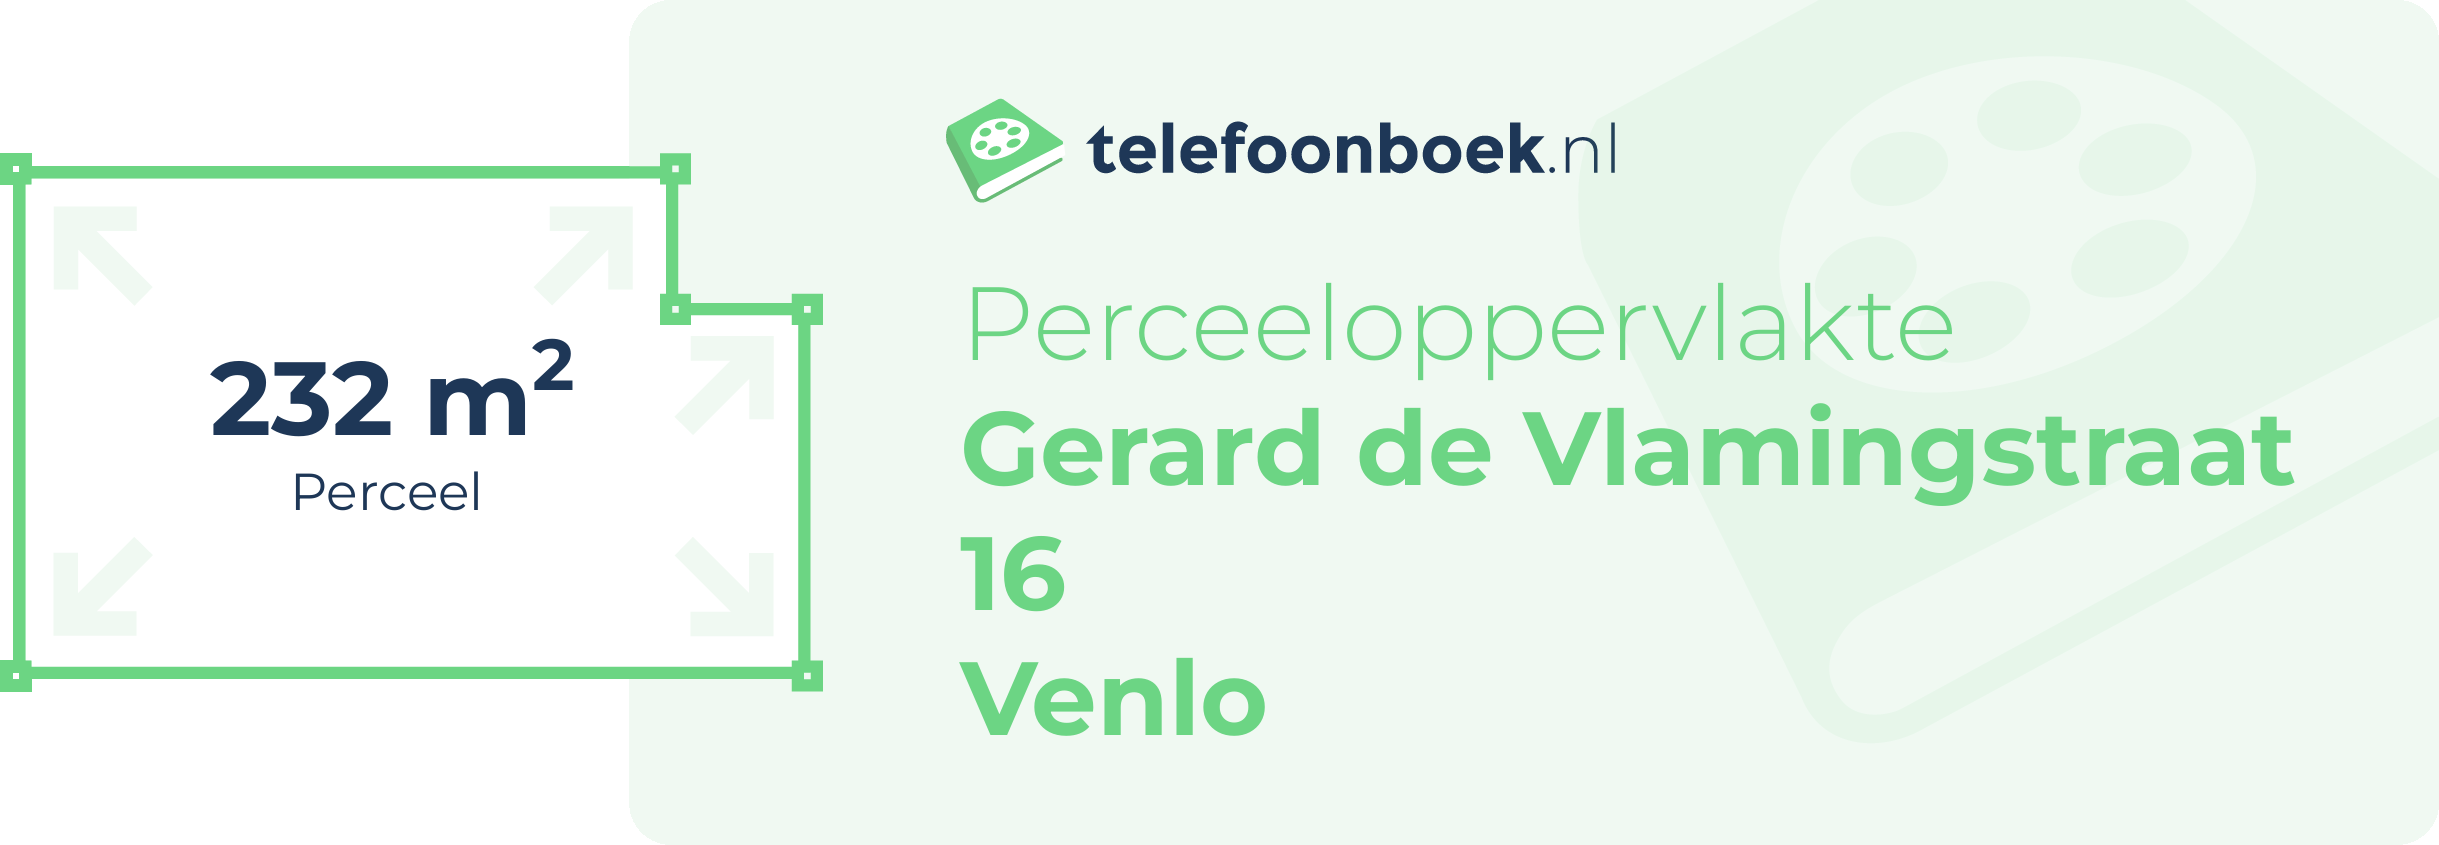 Perceeloppervlakte Gerard De Vlamingstraat 16 Venlo